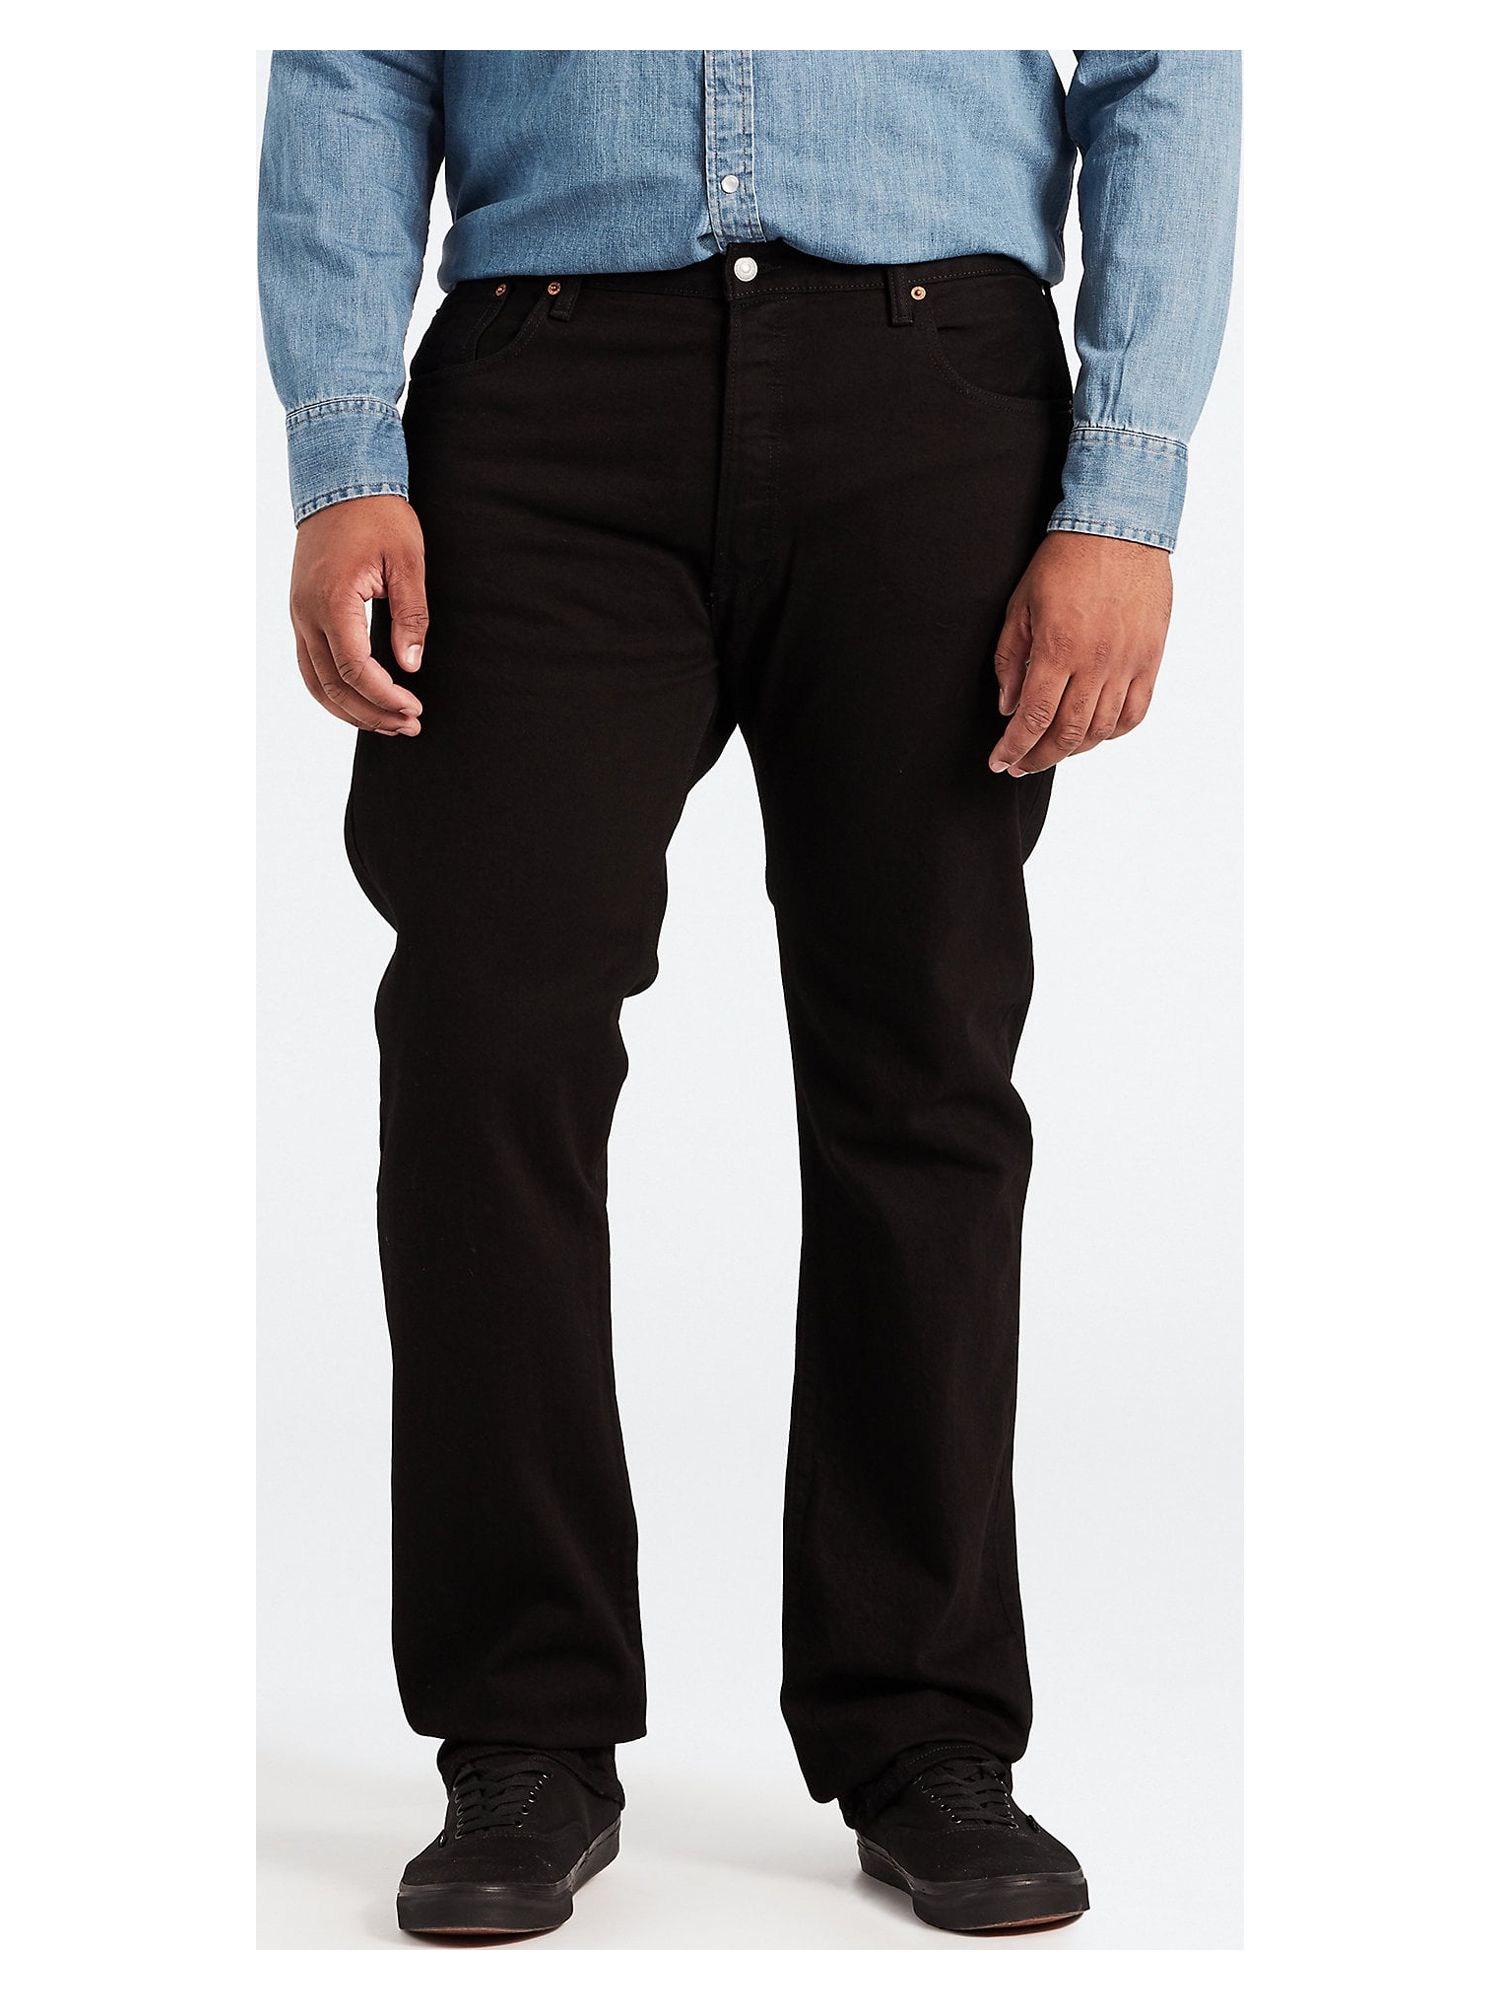 Levi's Men's Big & Tall 501 Original Fit Jeans - image 1 of 8